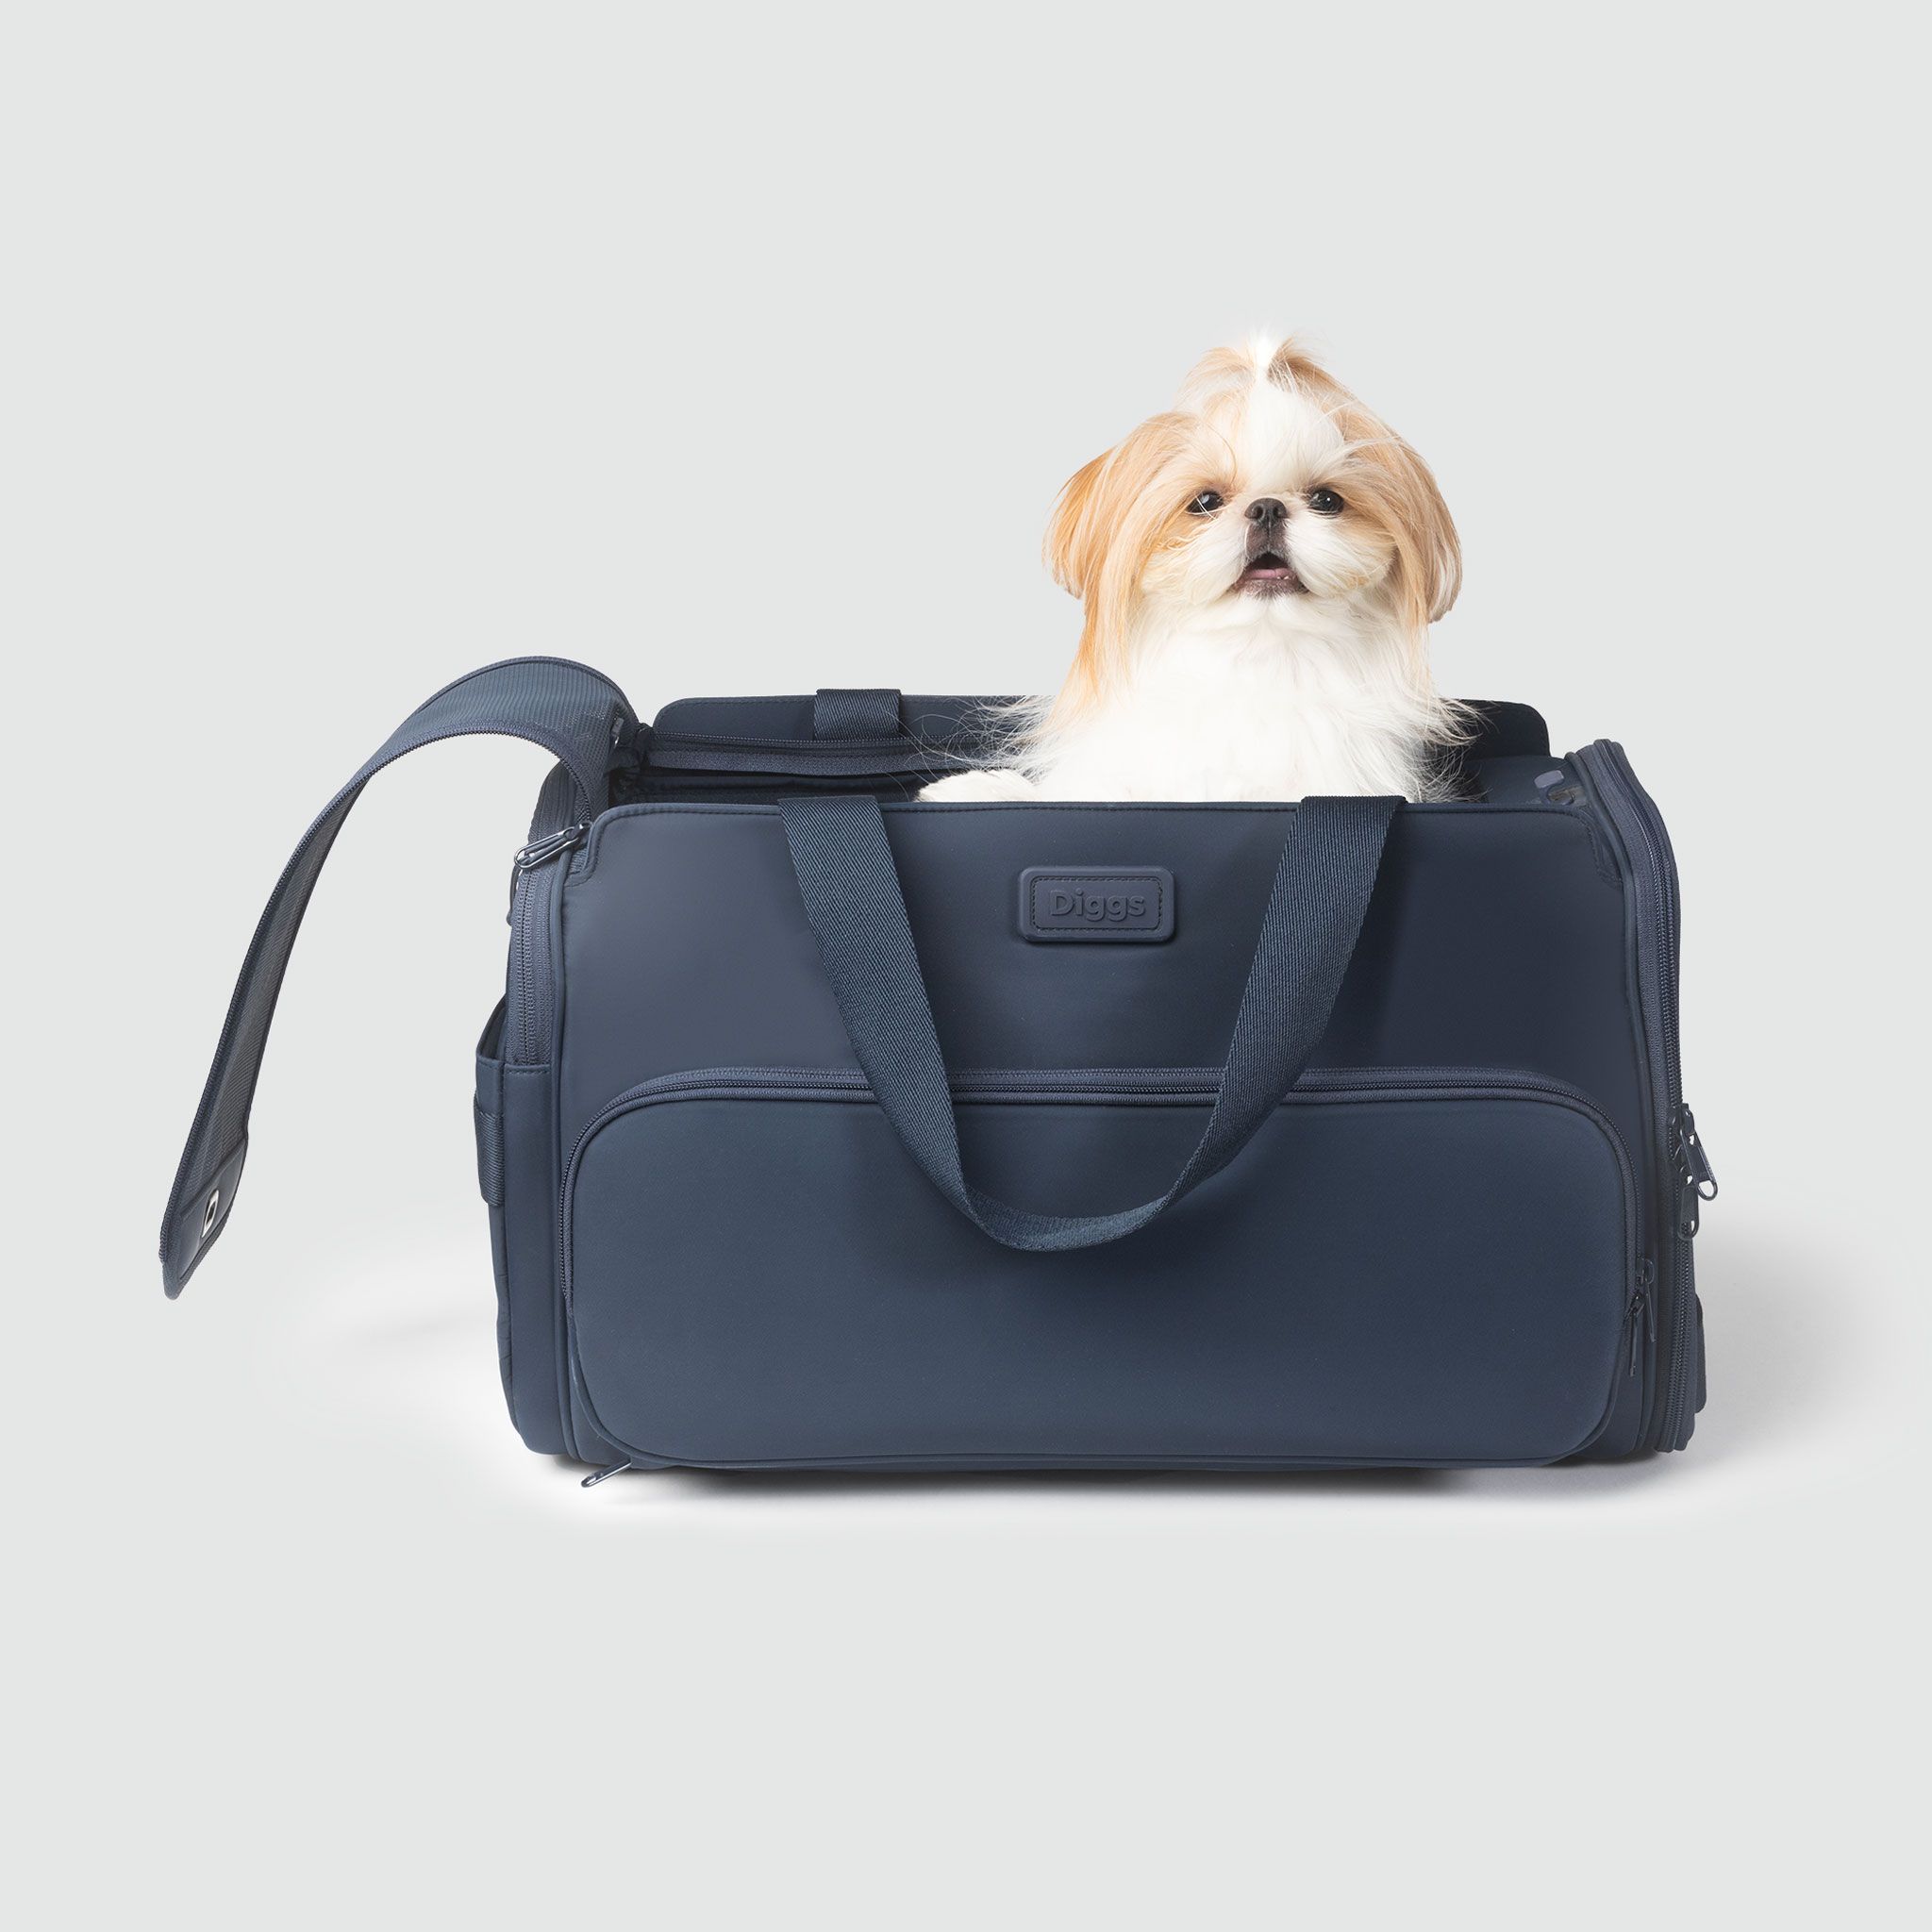 A small dog sitting inside of a blue Passenger pet carrier bag